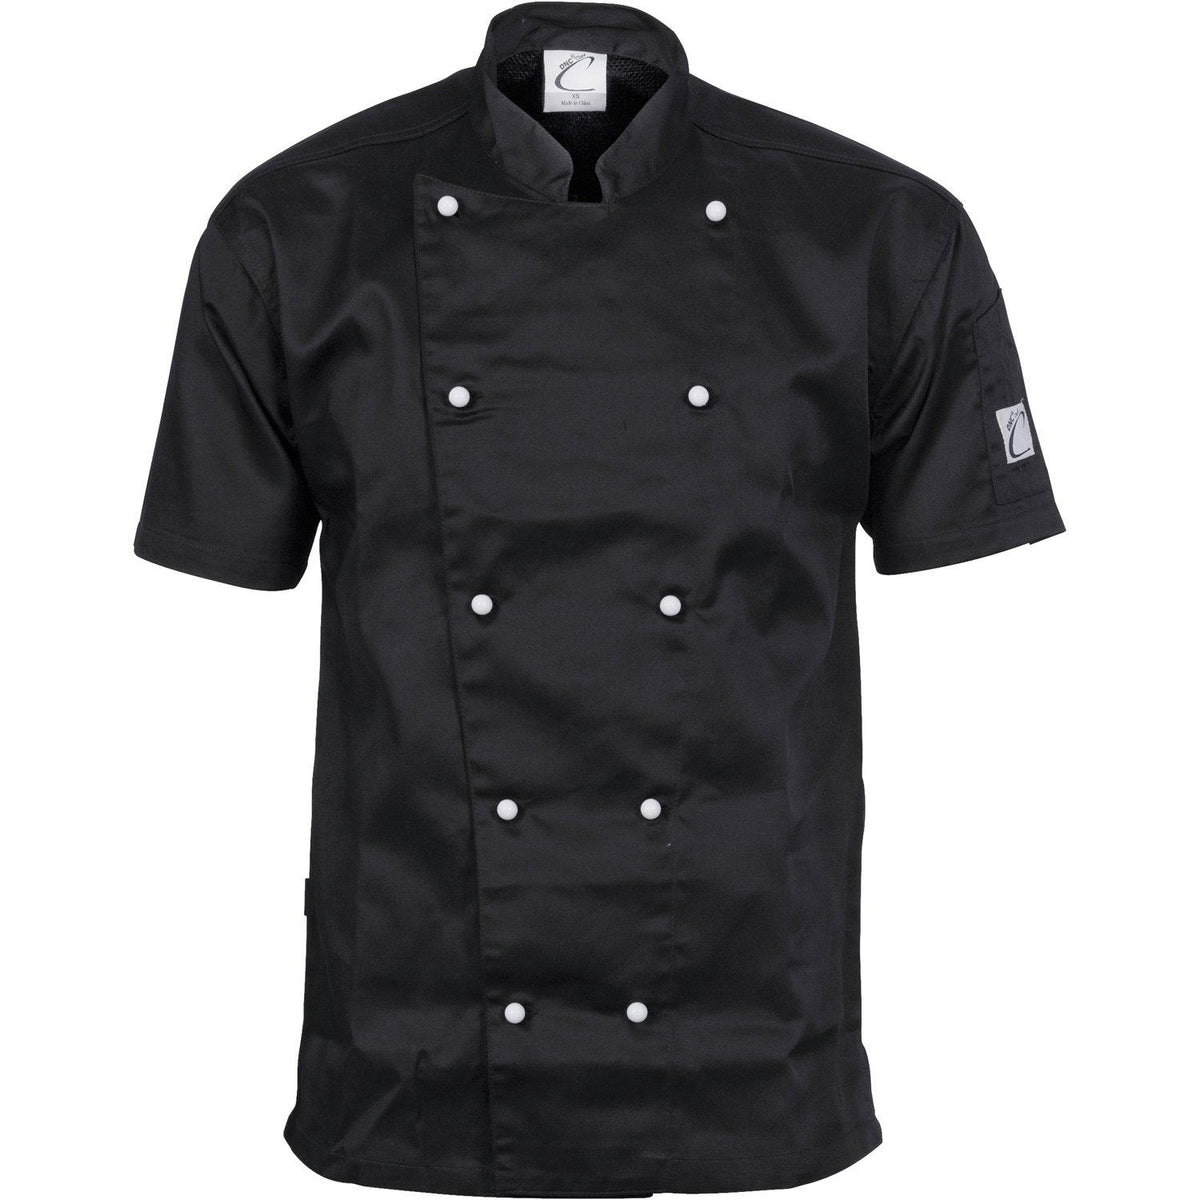 Buy DNC Cool Breeze Short Sleeve Modern Chef Jacket - 1123 Online